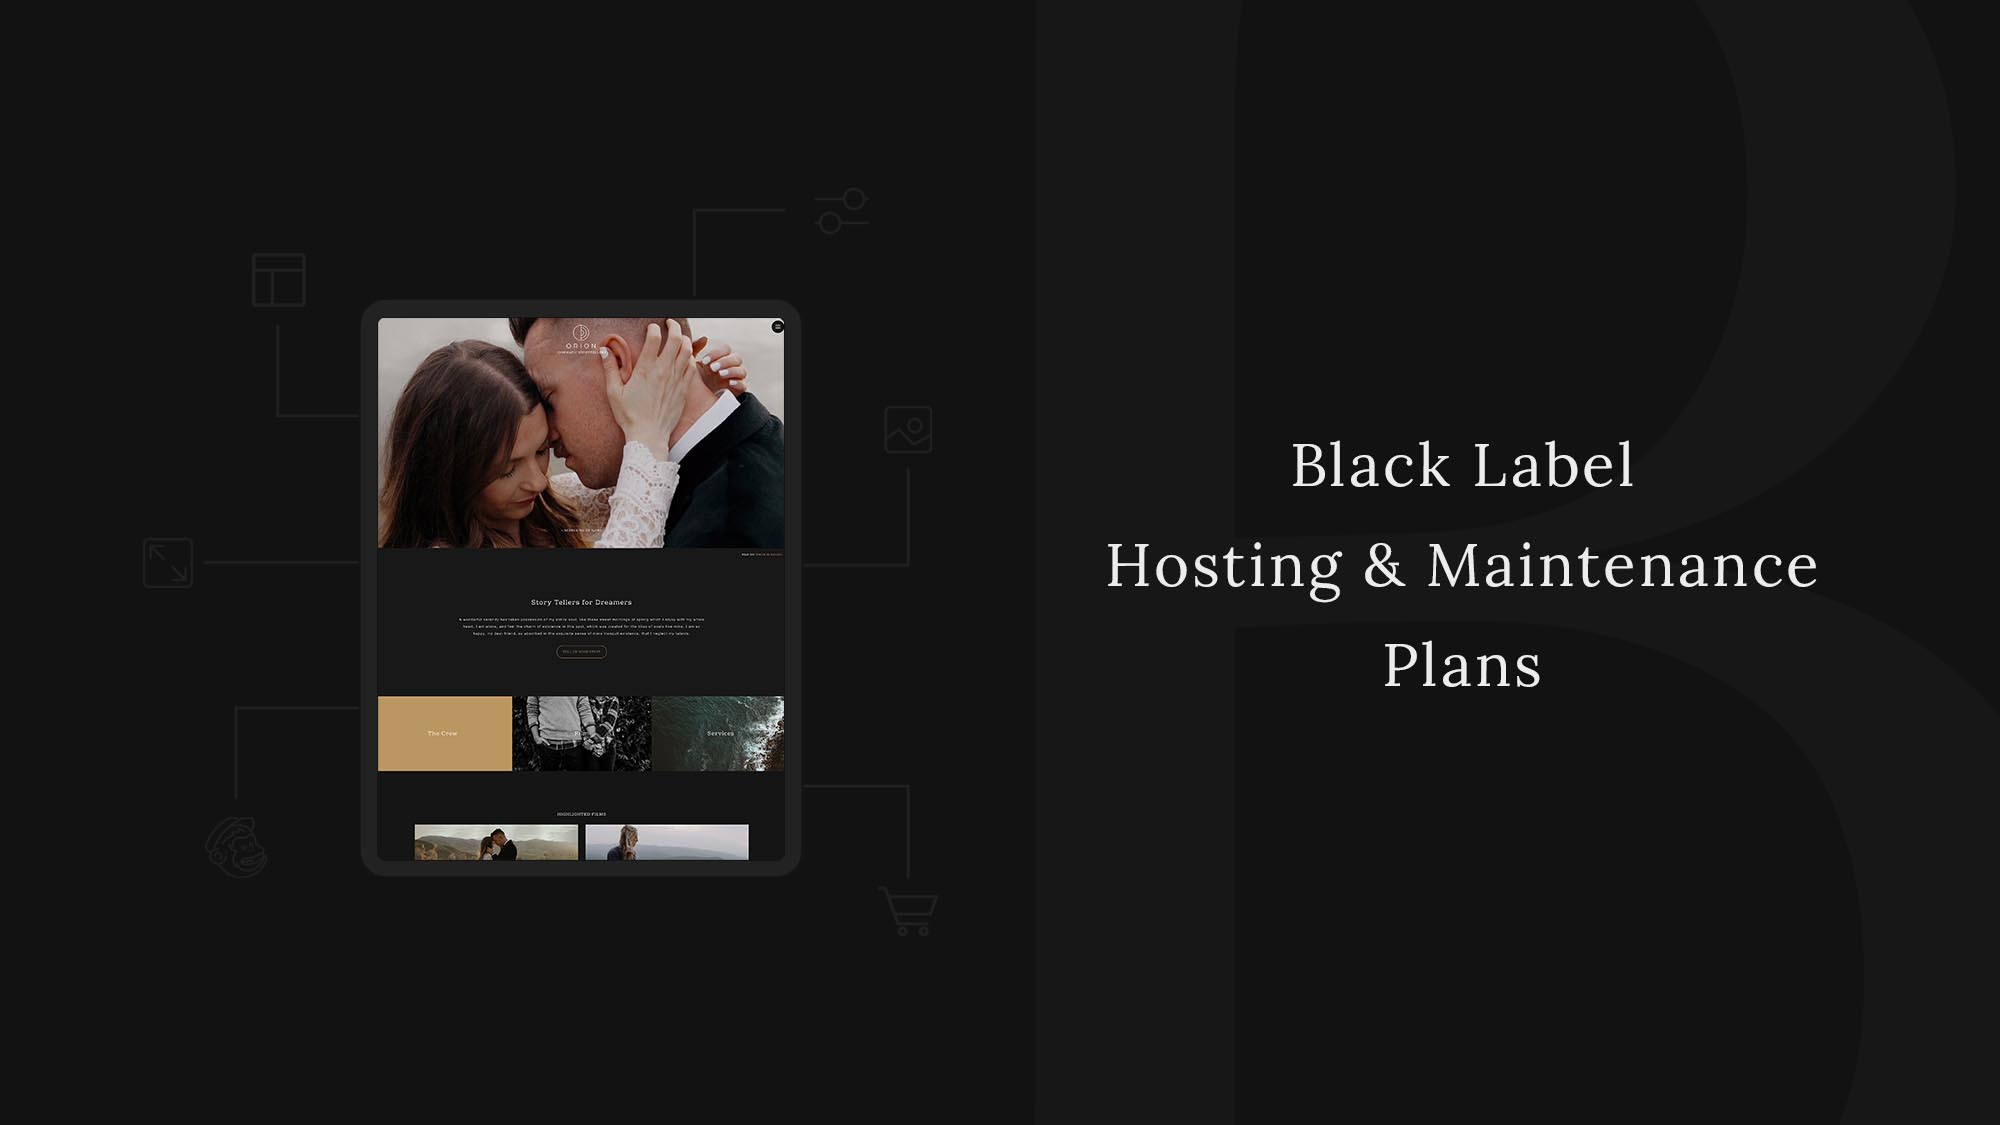 Black Label Hosting and Maintenance Plans by La Lune Creative